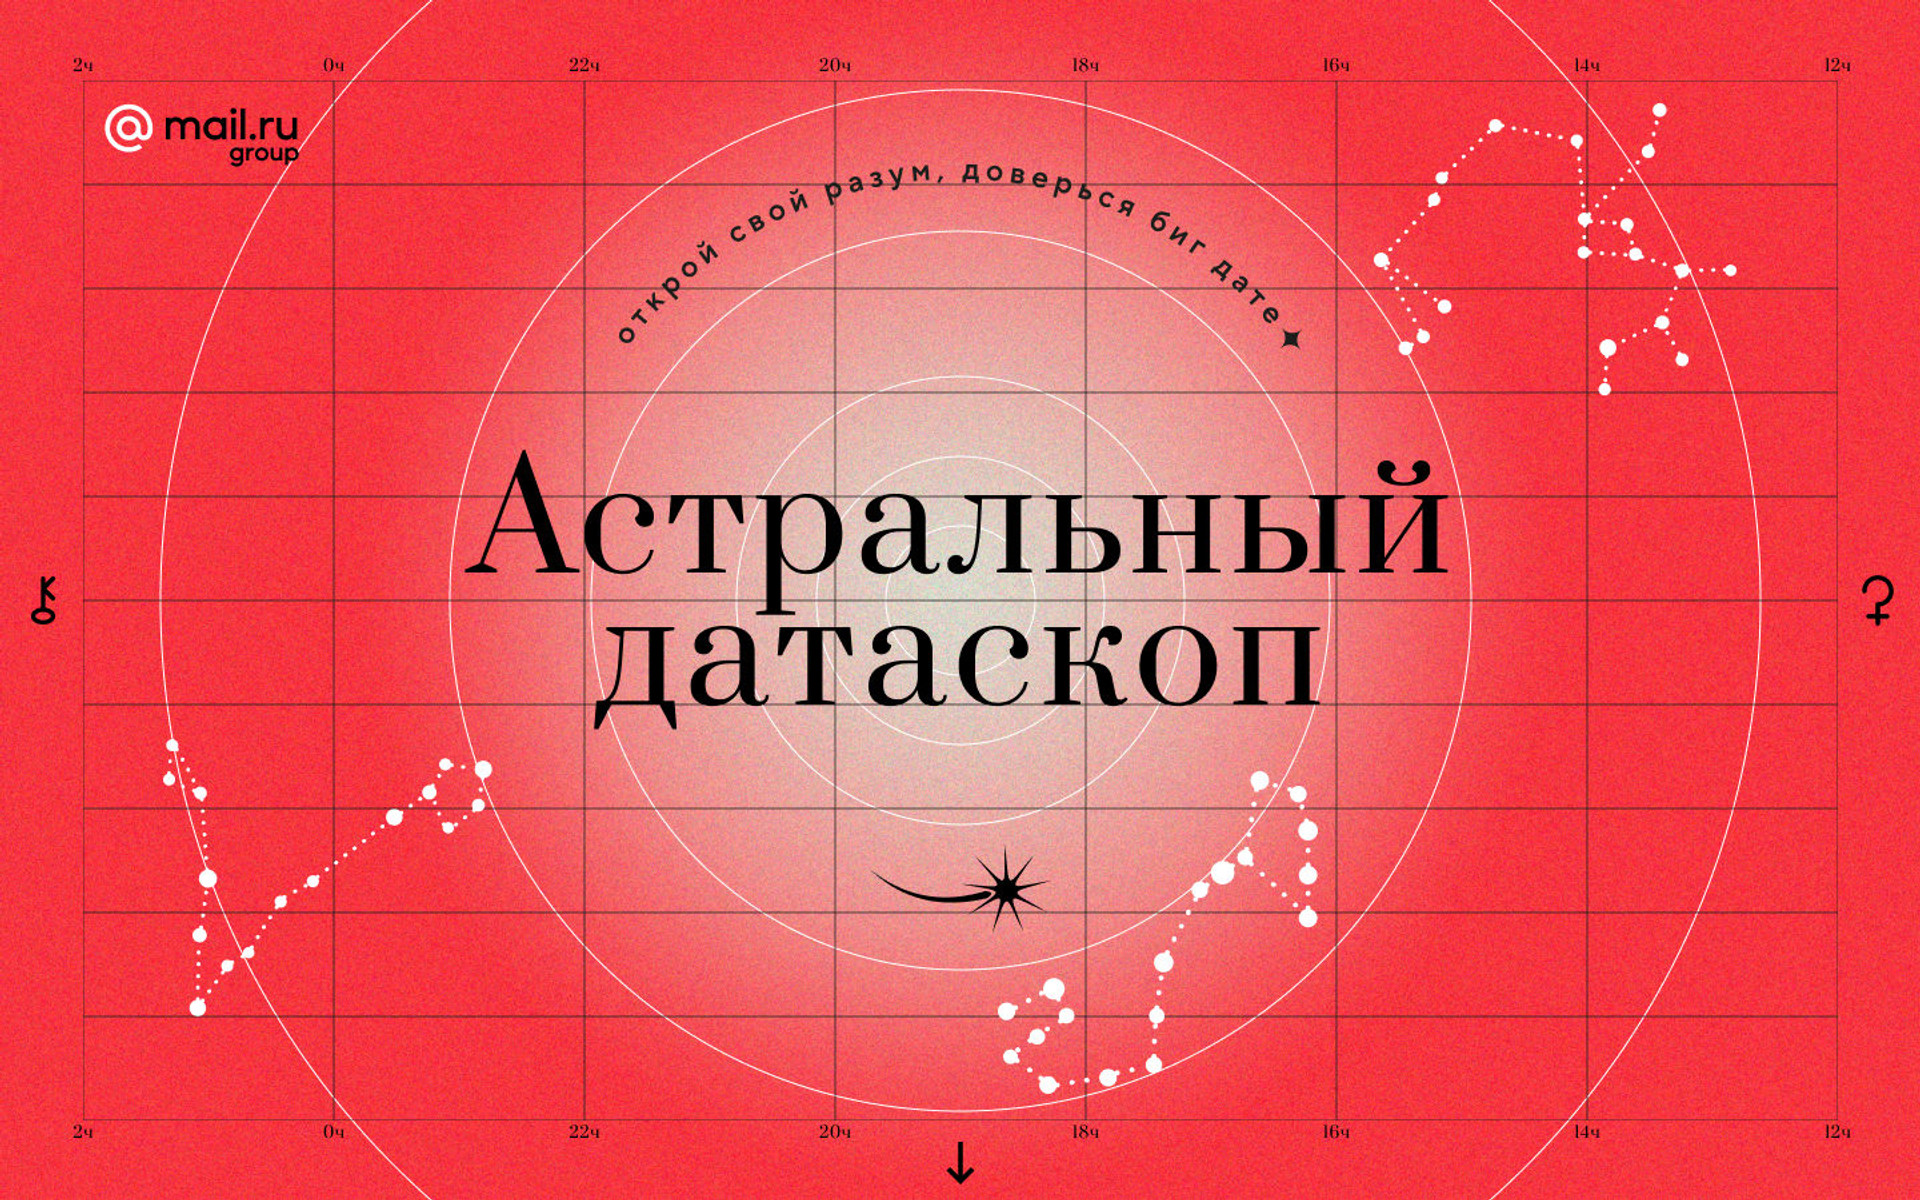 Astral Datascope do Grupo Mail.ru